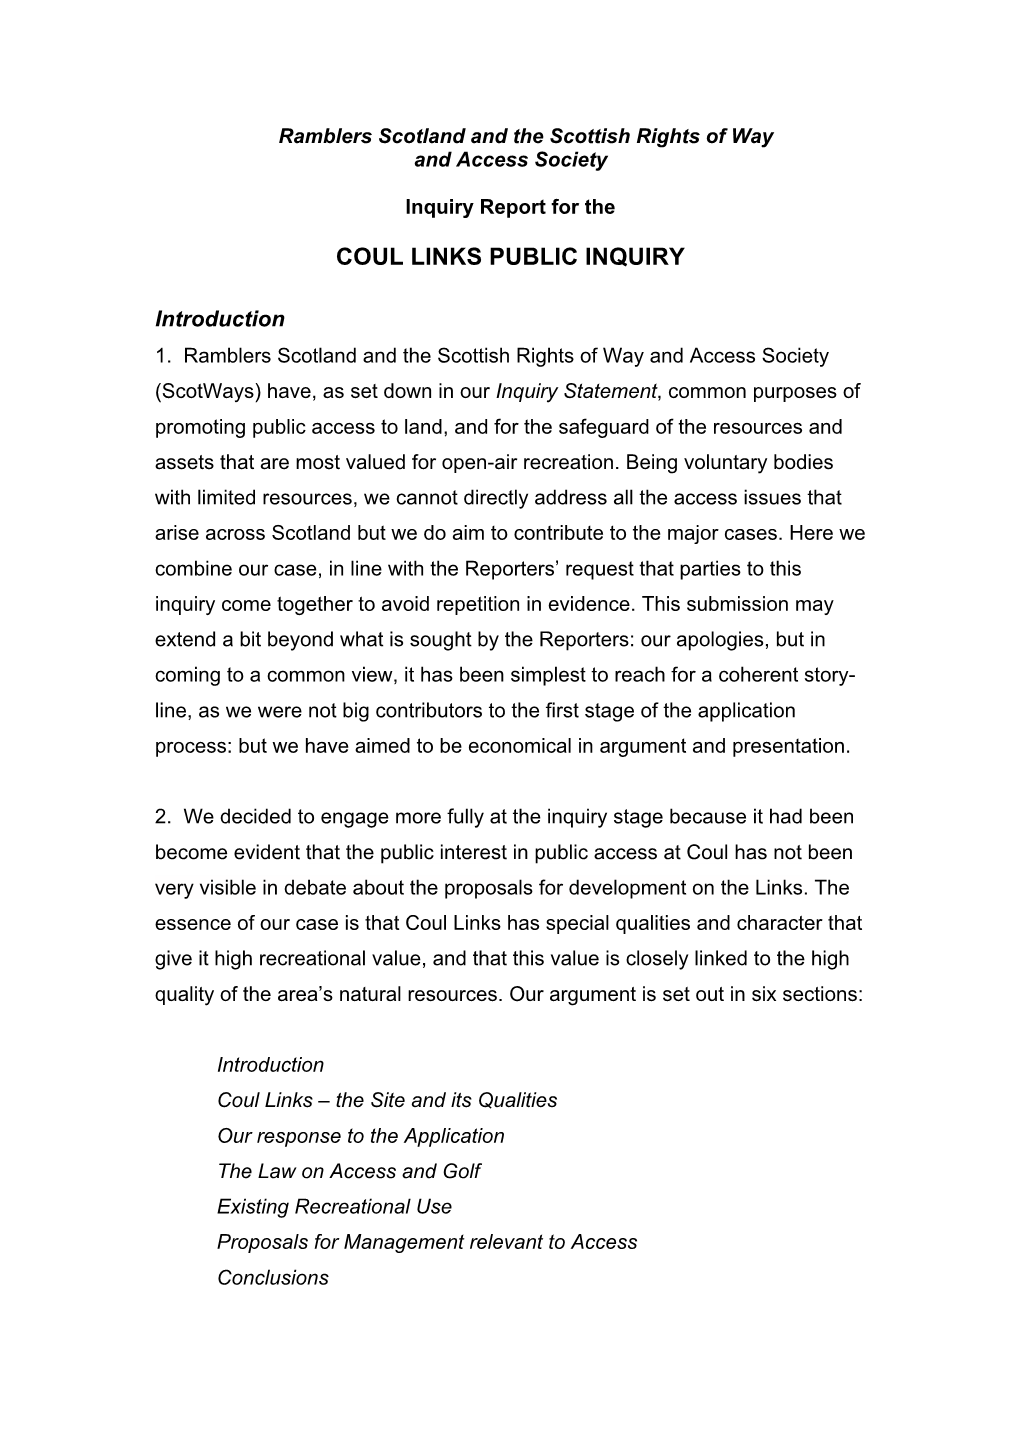 Coul Links Public Inquiry